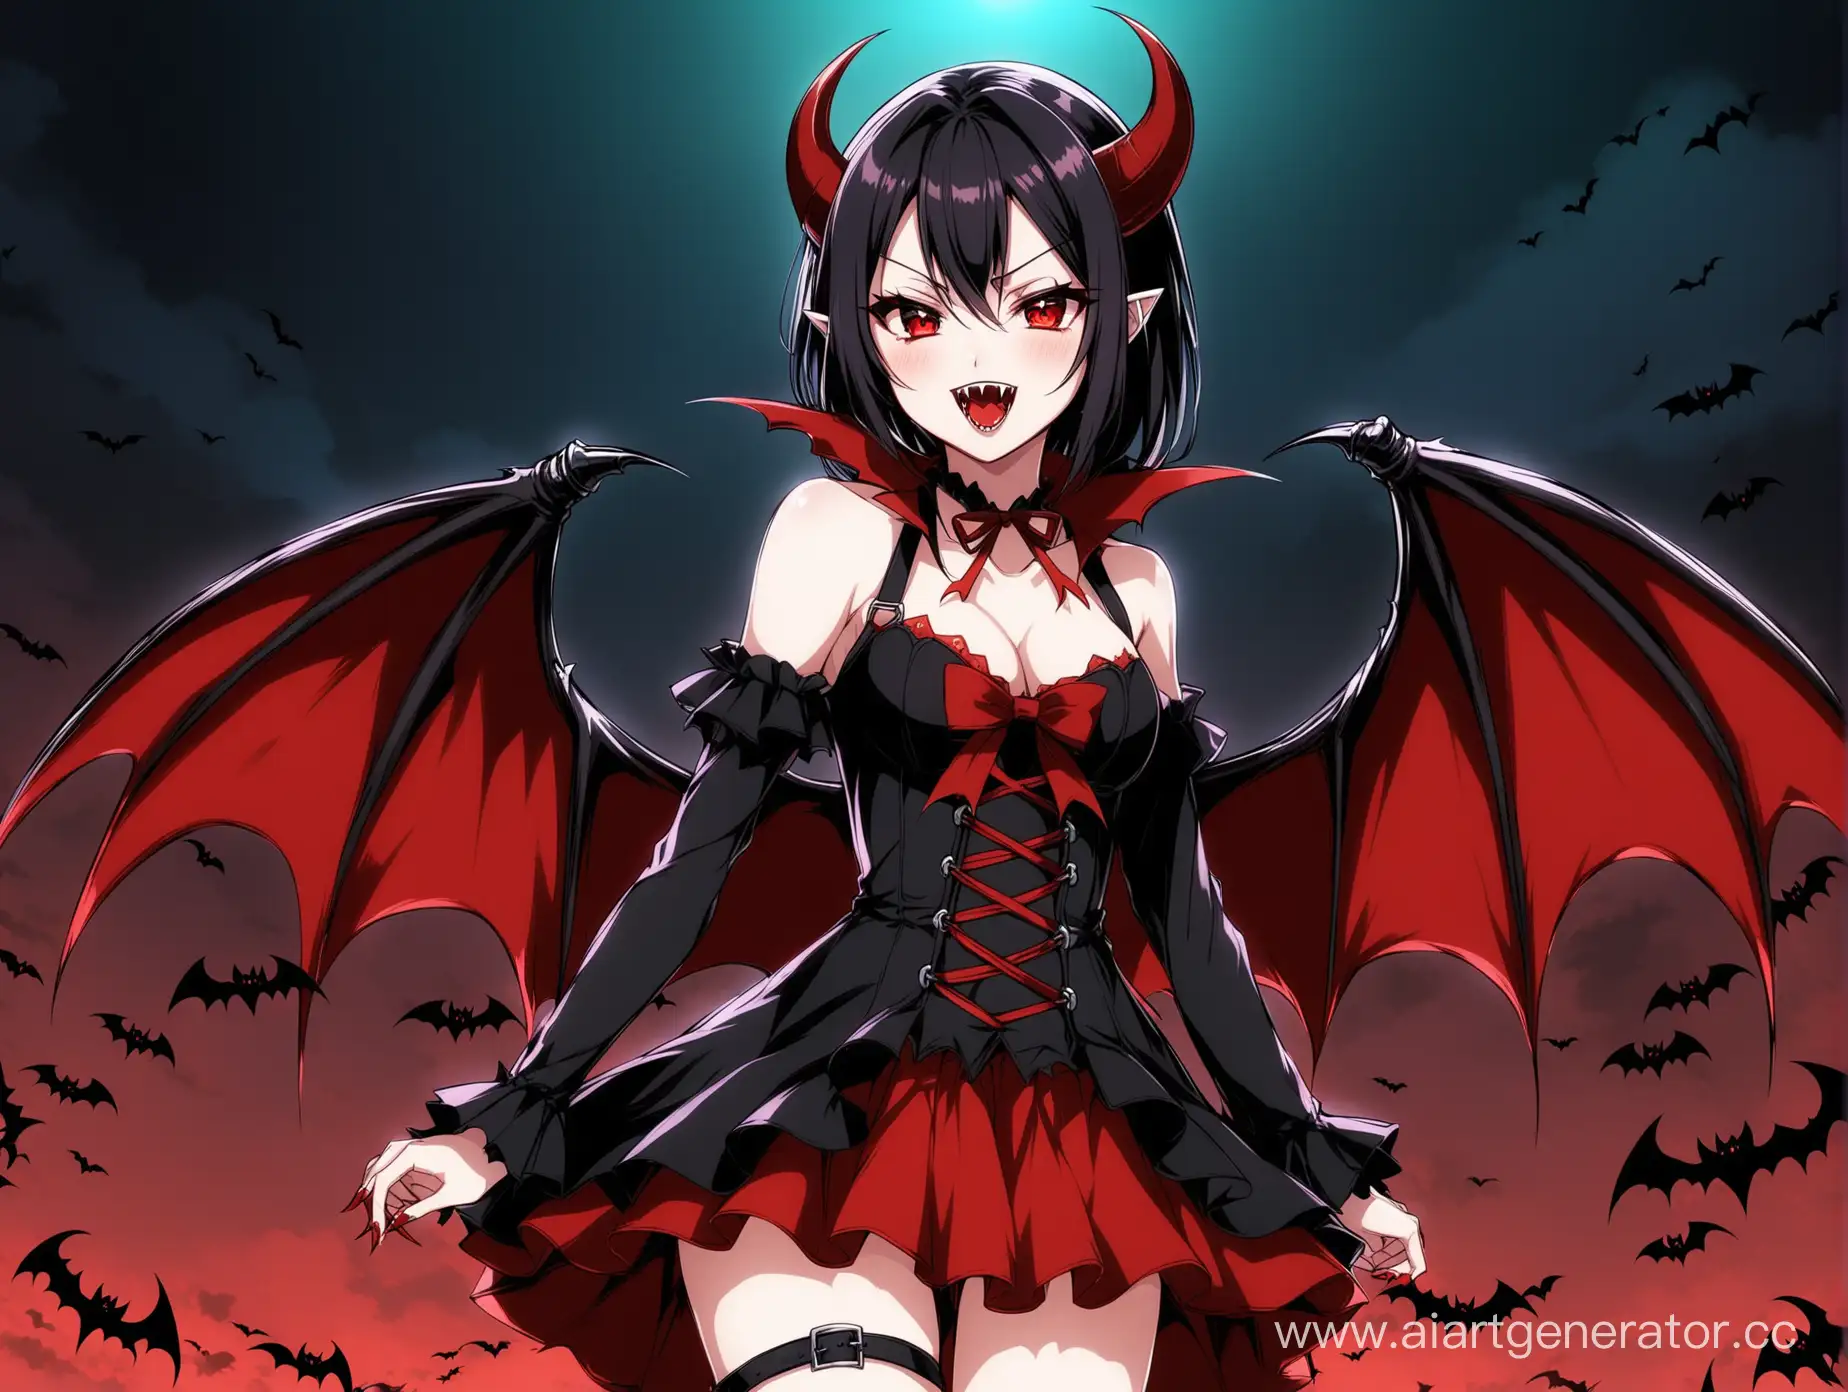 Dark-Fantasy-Illustration-of-a-Demon-Vampire-Anime-Girl